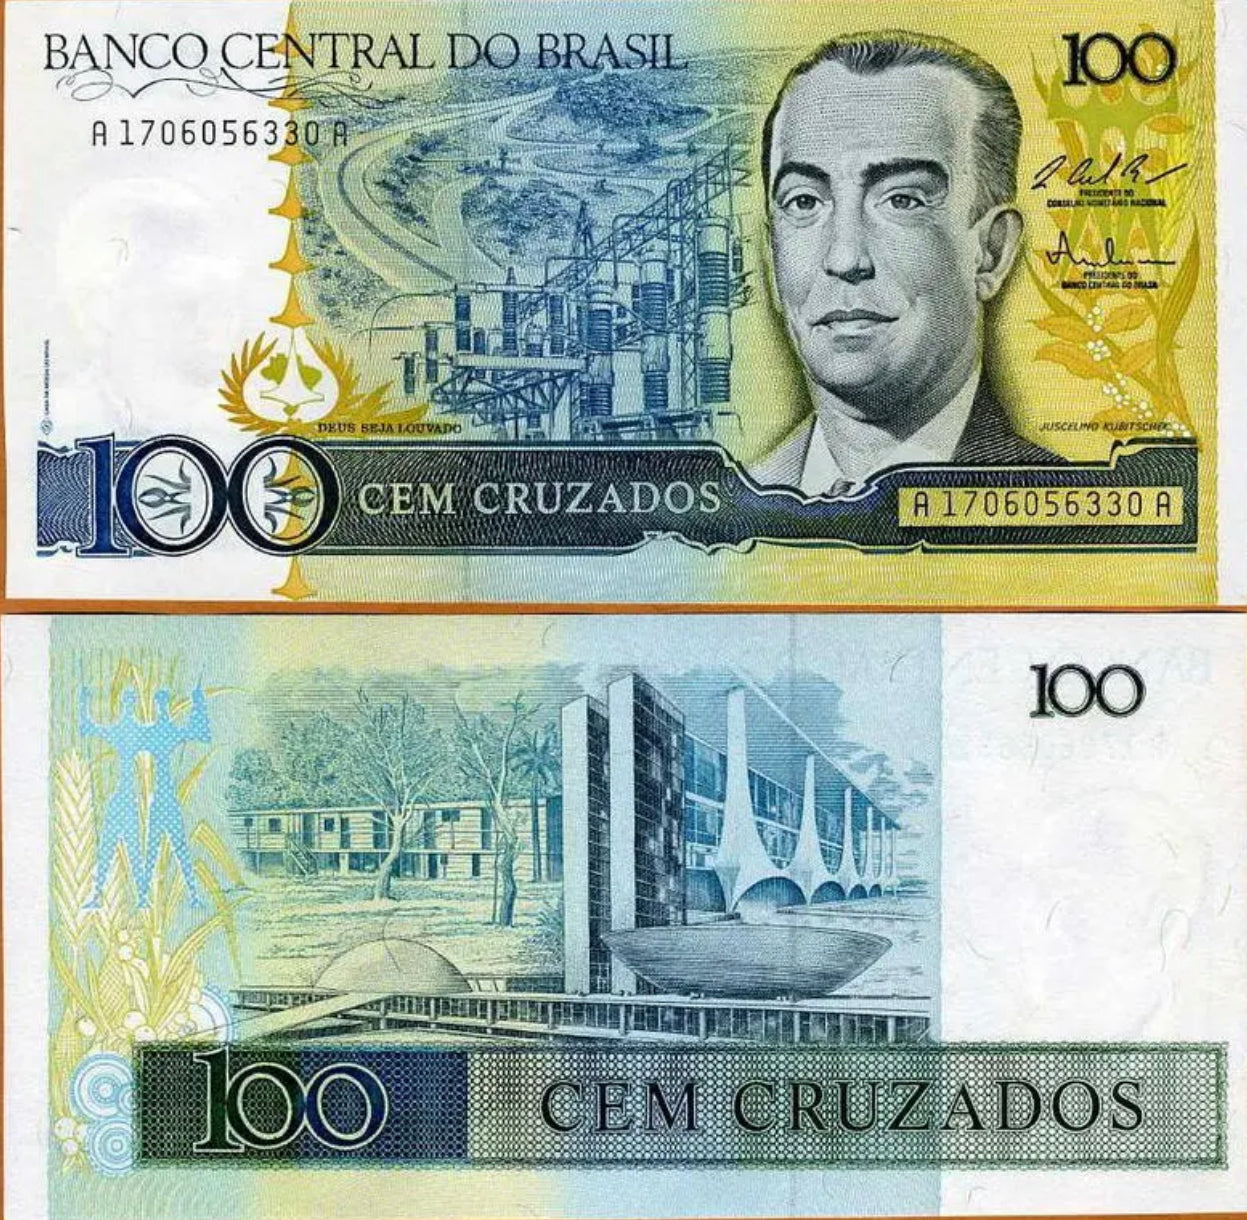 Brazil, 100 cruzados, ND (1986-1988), P-211, UNC